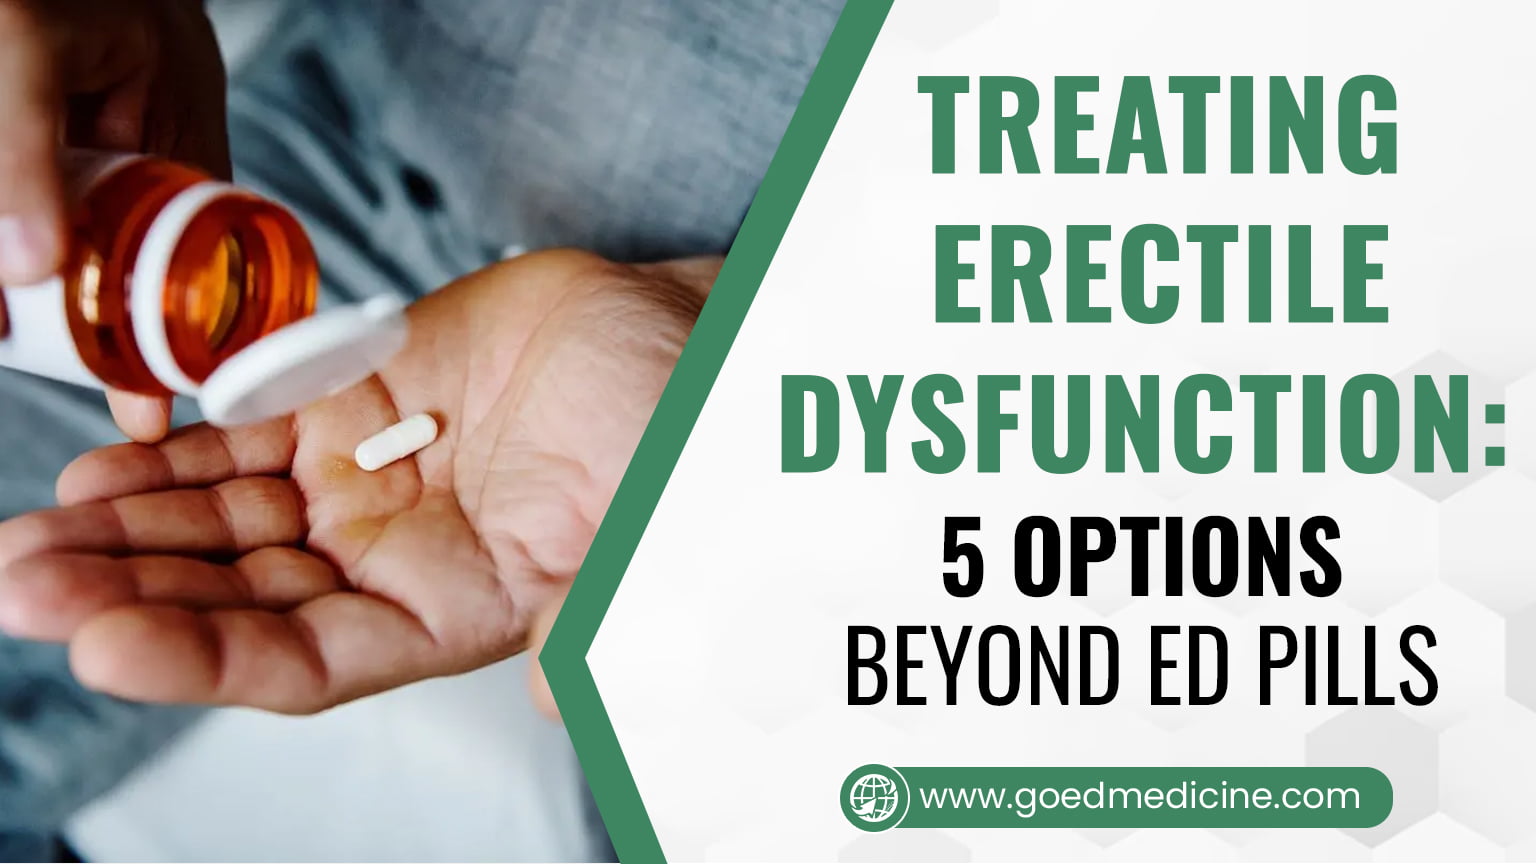 Treating Erectile Dysfunction 5 Options Beyond ED Pills